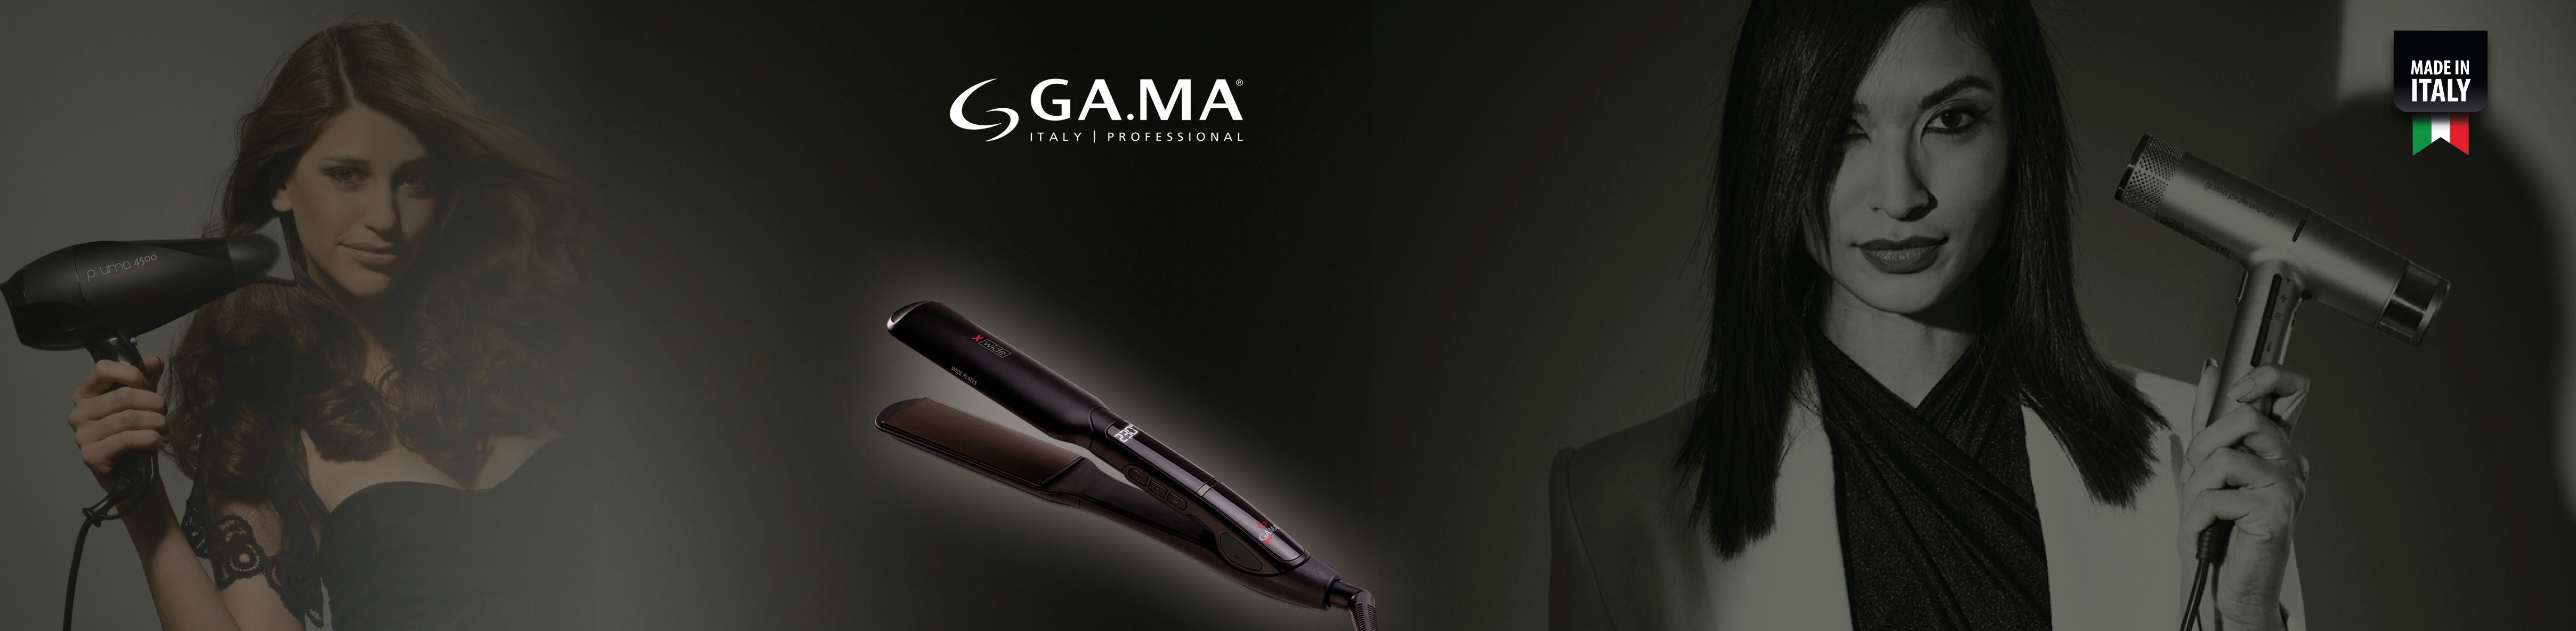 WEB IMAGE GAMA_produkty gama italy profesional 2